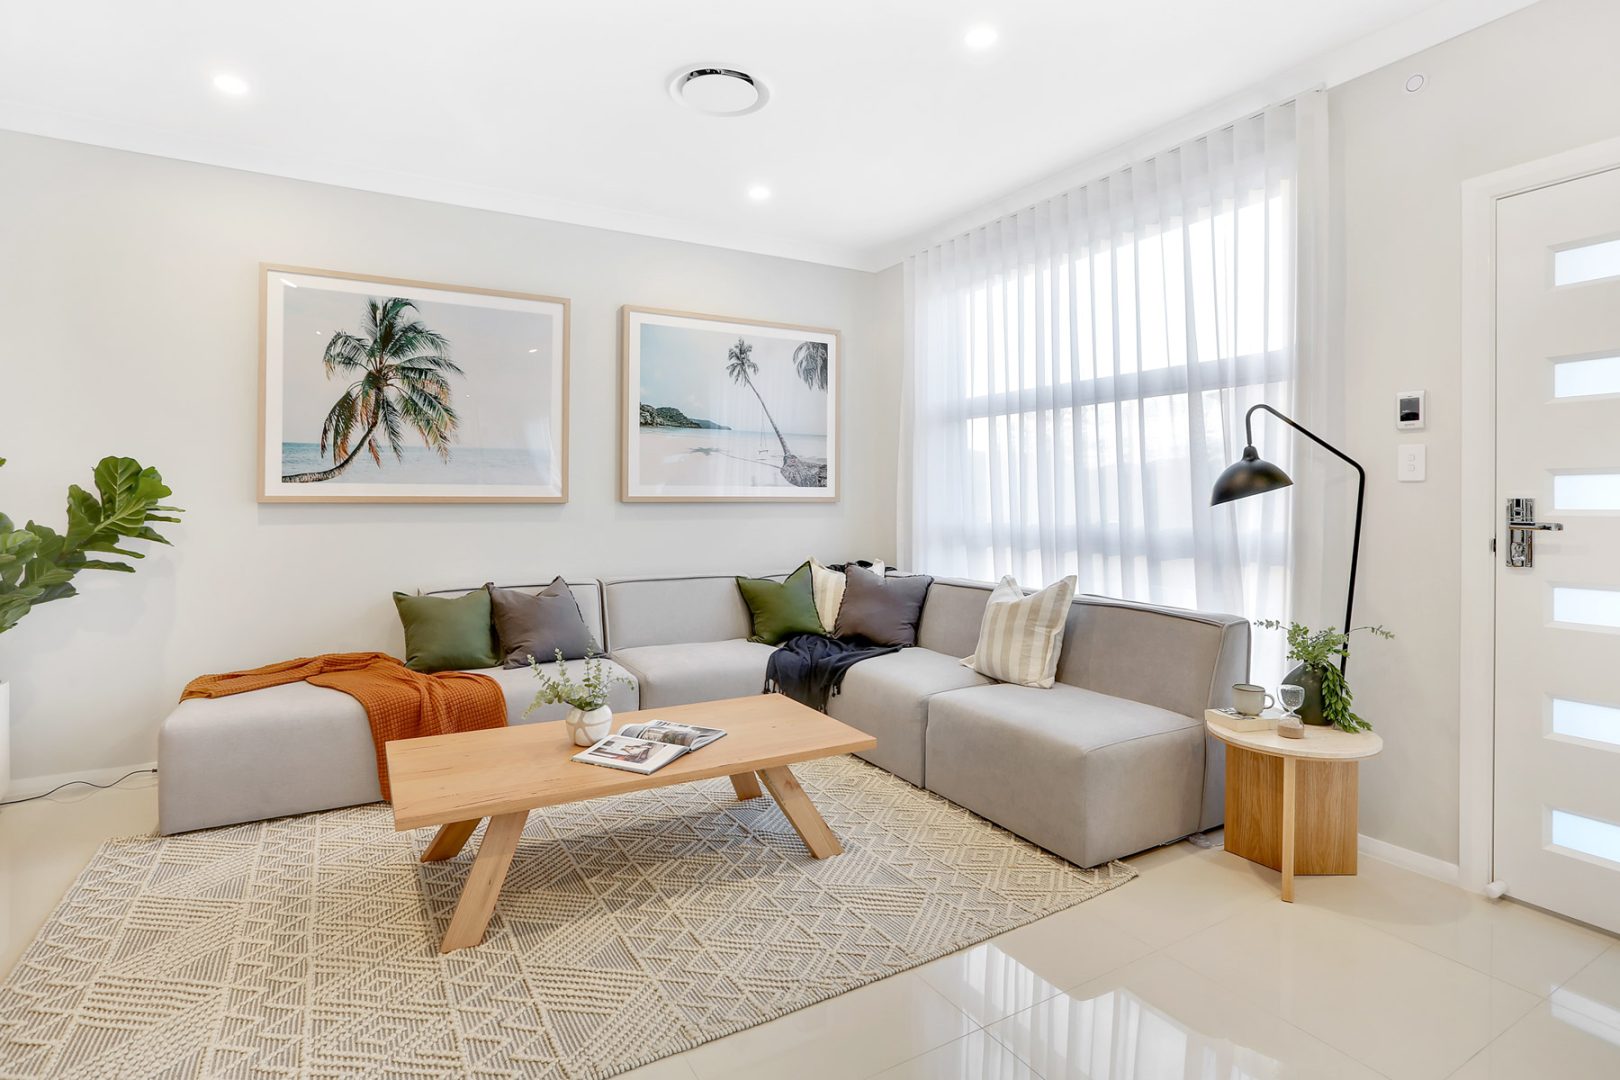 Parkwood 36 - Display homes - Living room Area designs